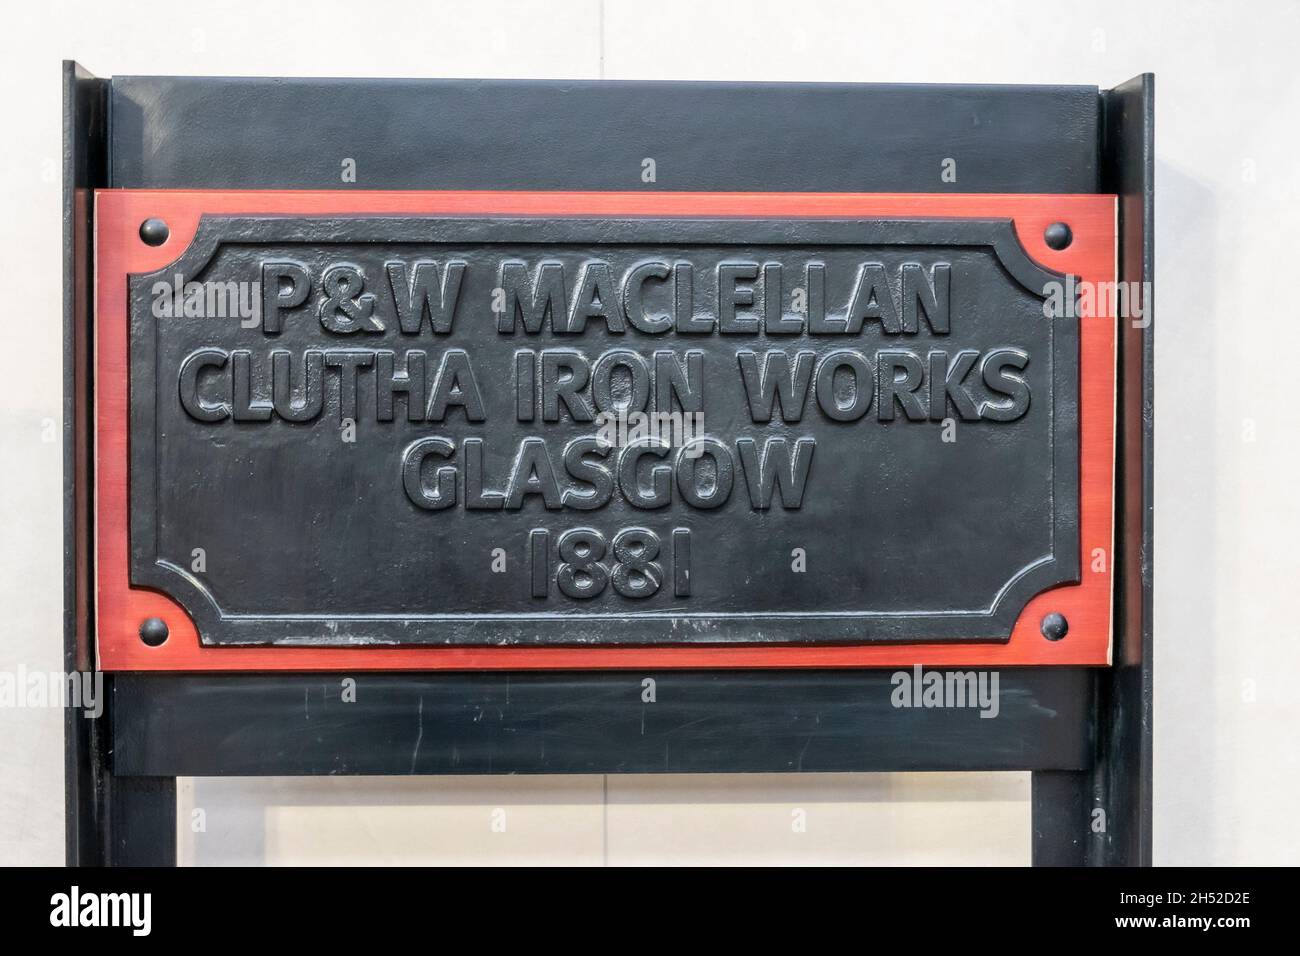 Plaque in Queen Street Railway Station inNorth Hanover Street Glasgow Scotland UK for P&W Maclellan clutha iron works glasgow Stock Photo